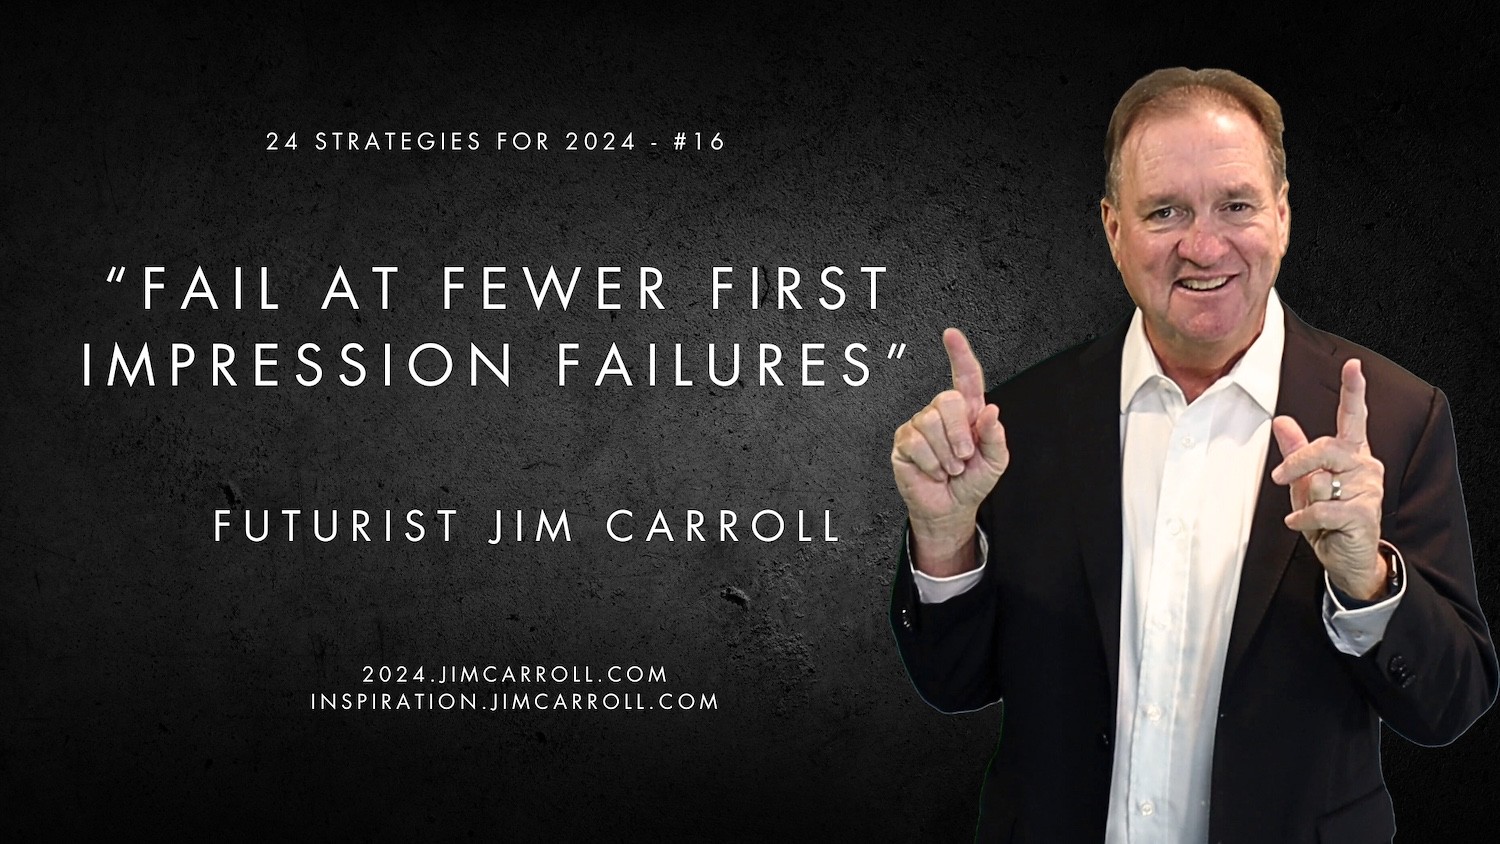 "Fail at fewer first impression failures" - Futurist Jim Carroll